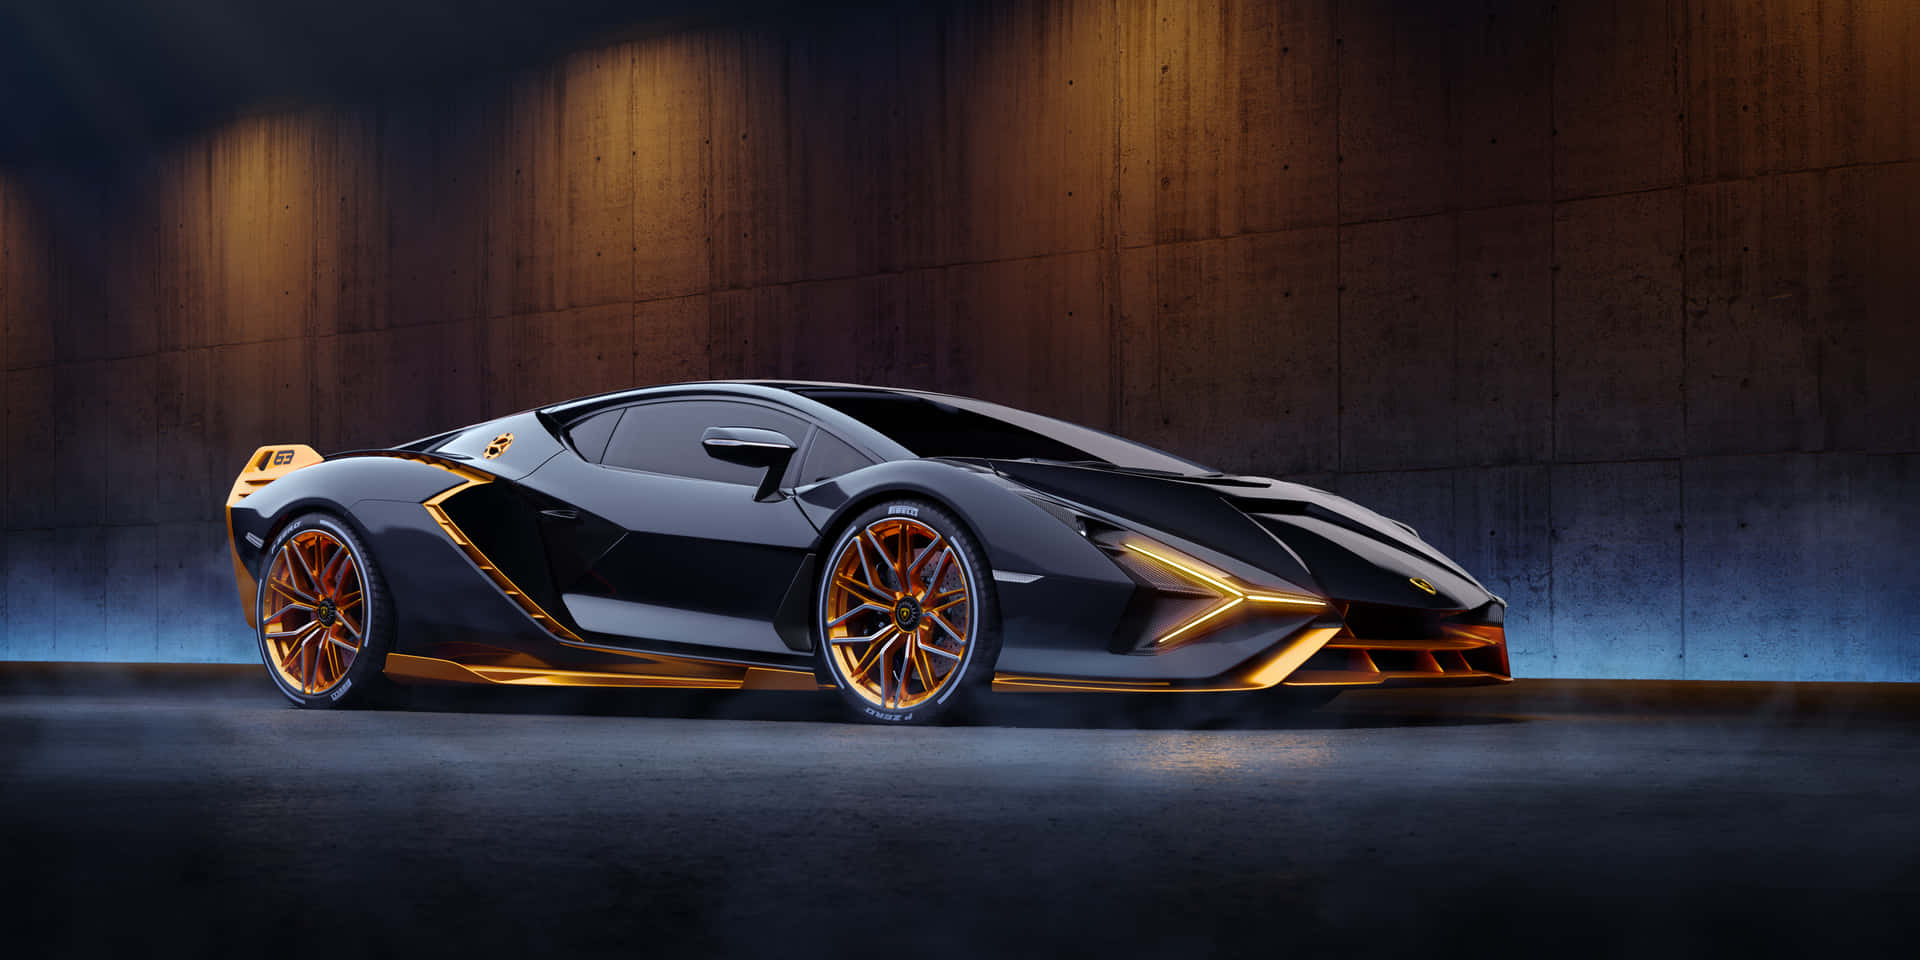 "Experience the Power of a Lamborghini"